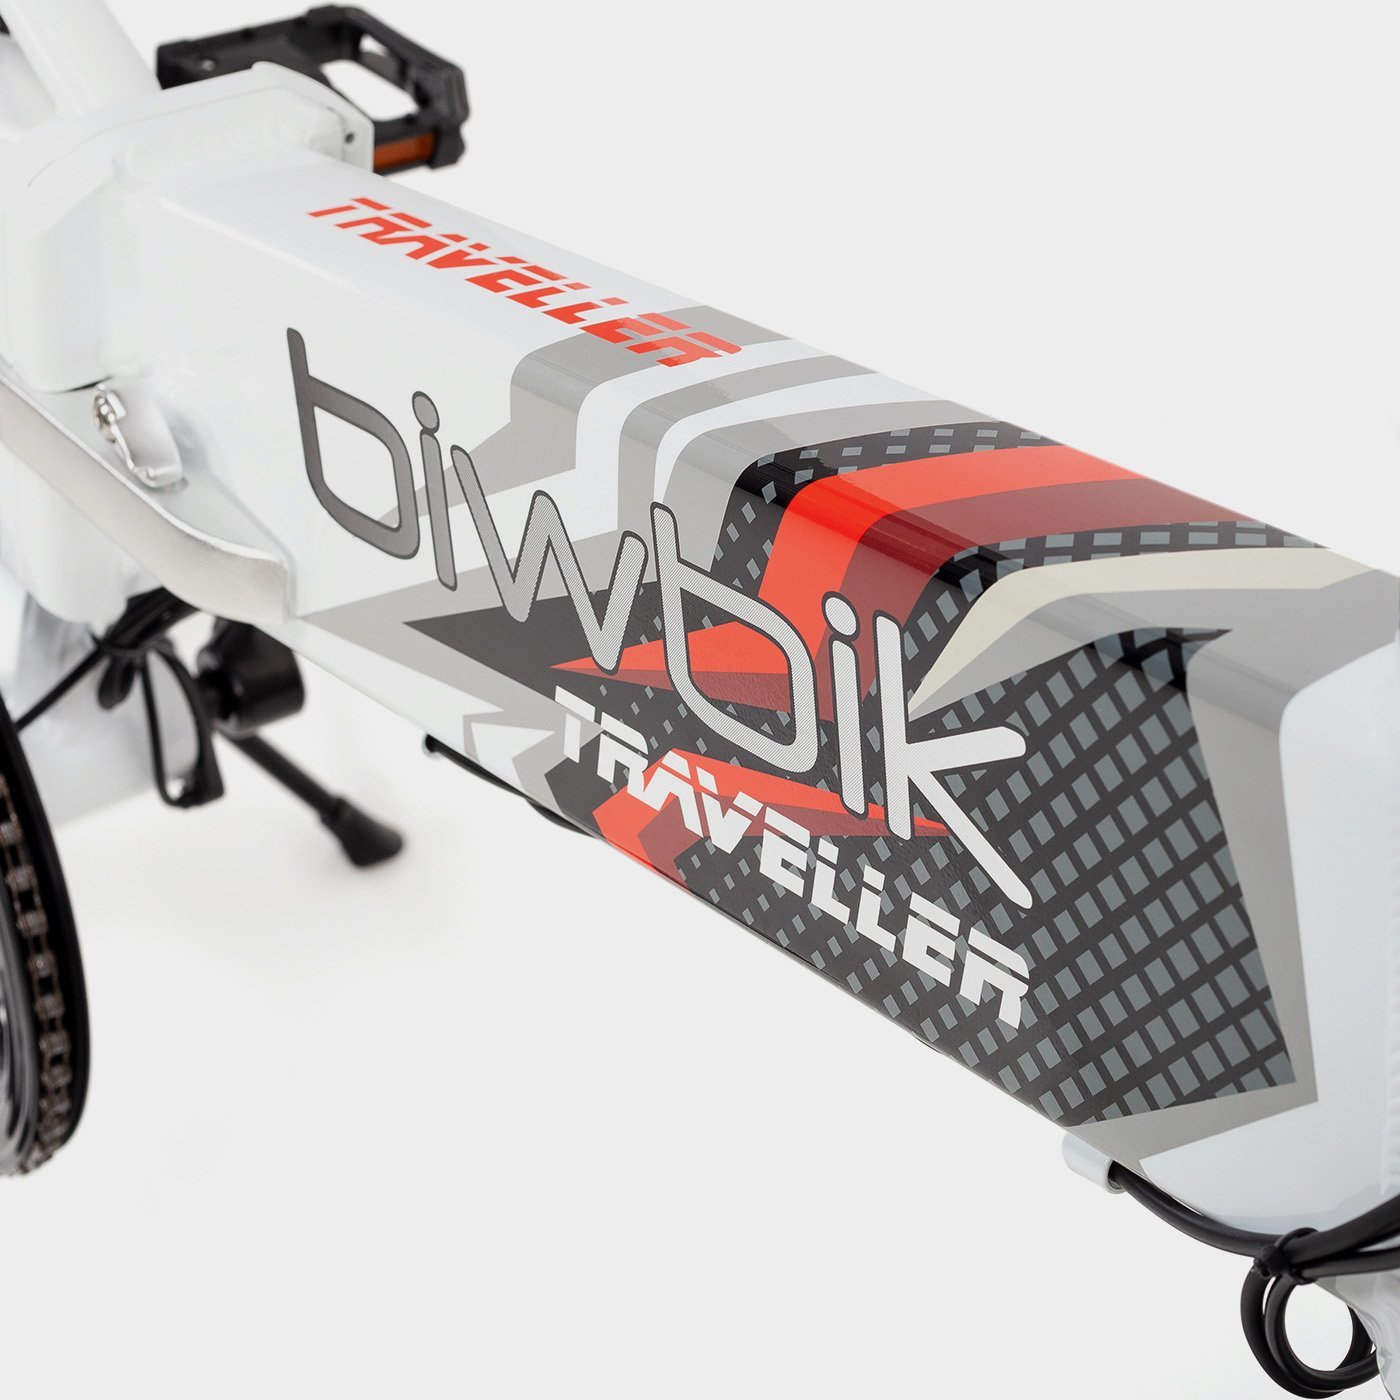 Biwbik Traveller white folding electric bike